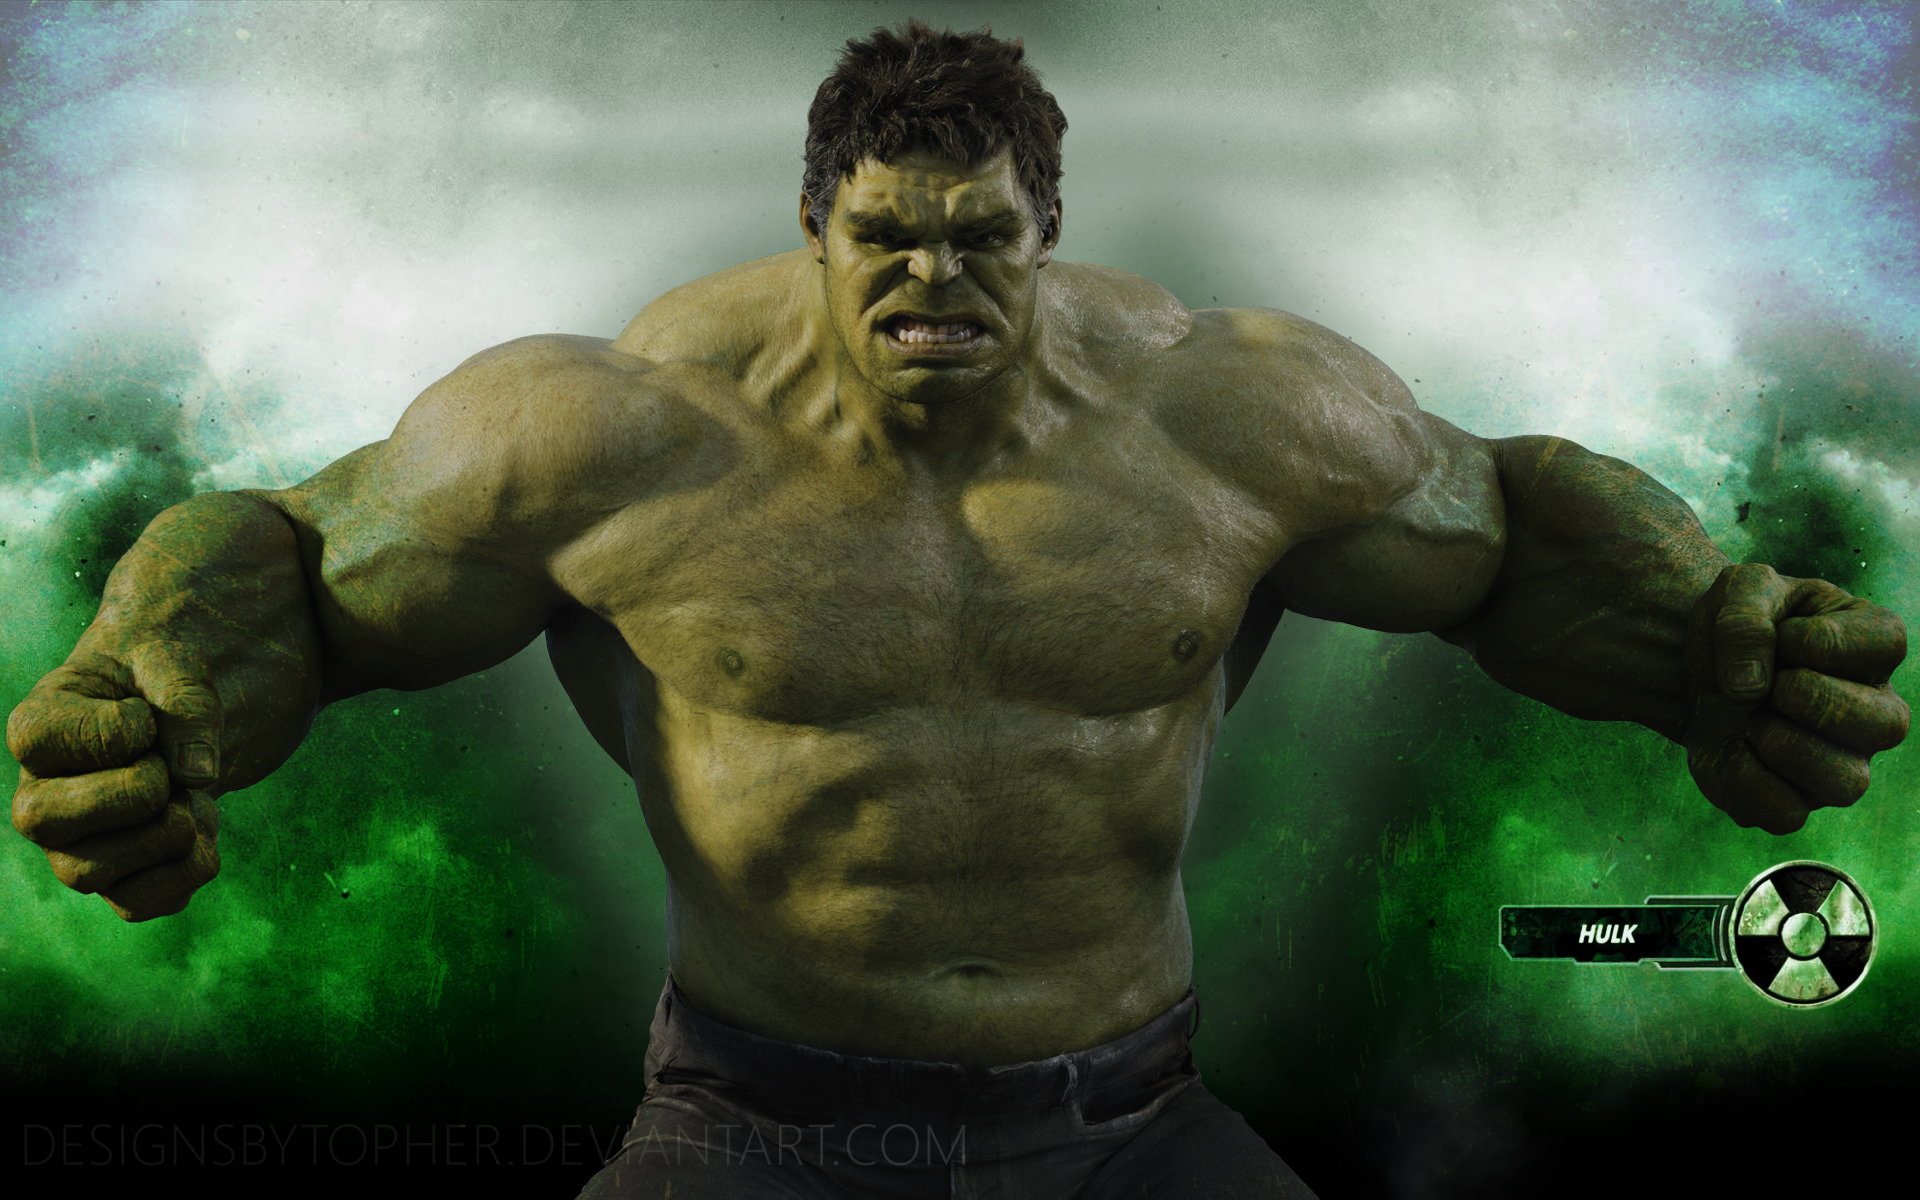 Hulk 03 by DesignsByTopher on DeviantArt